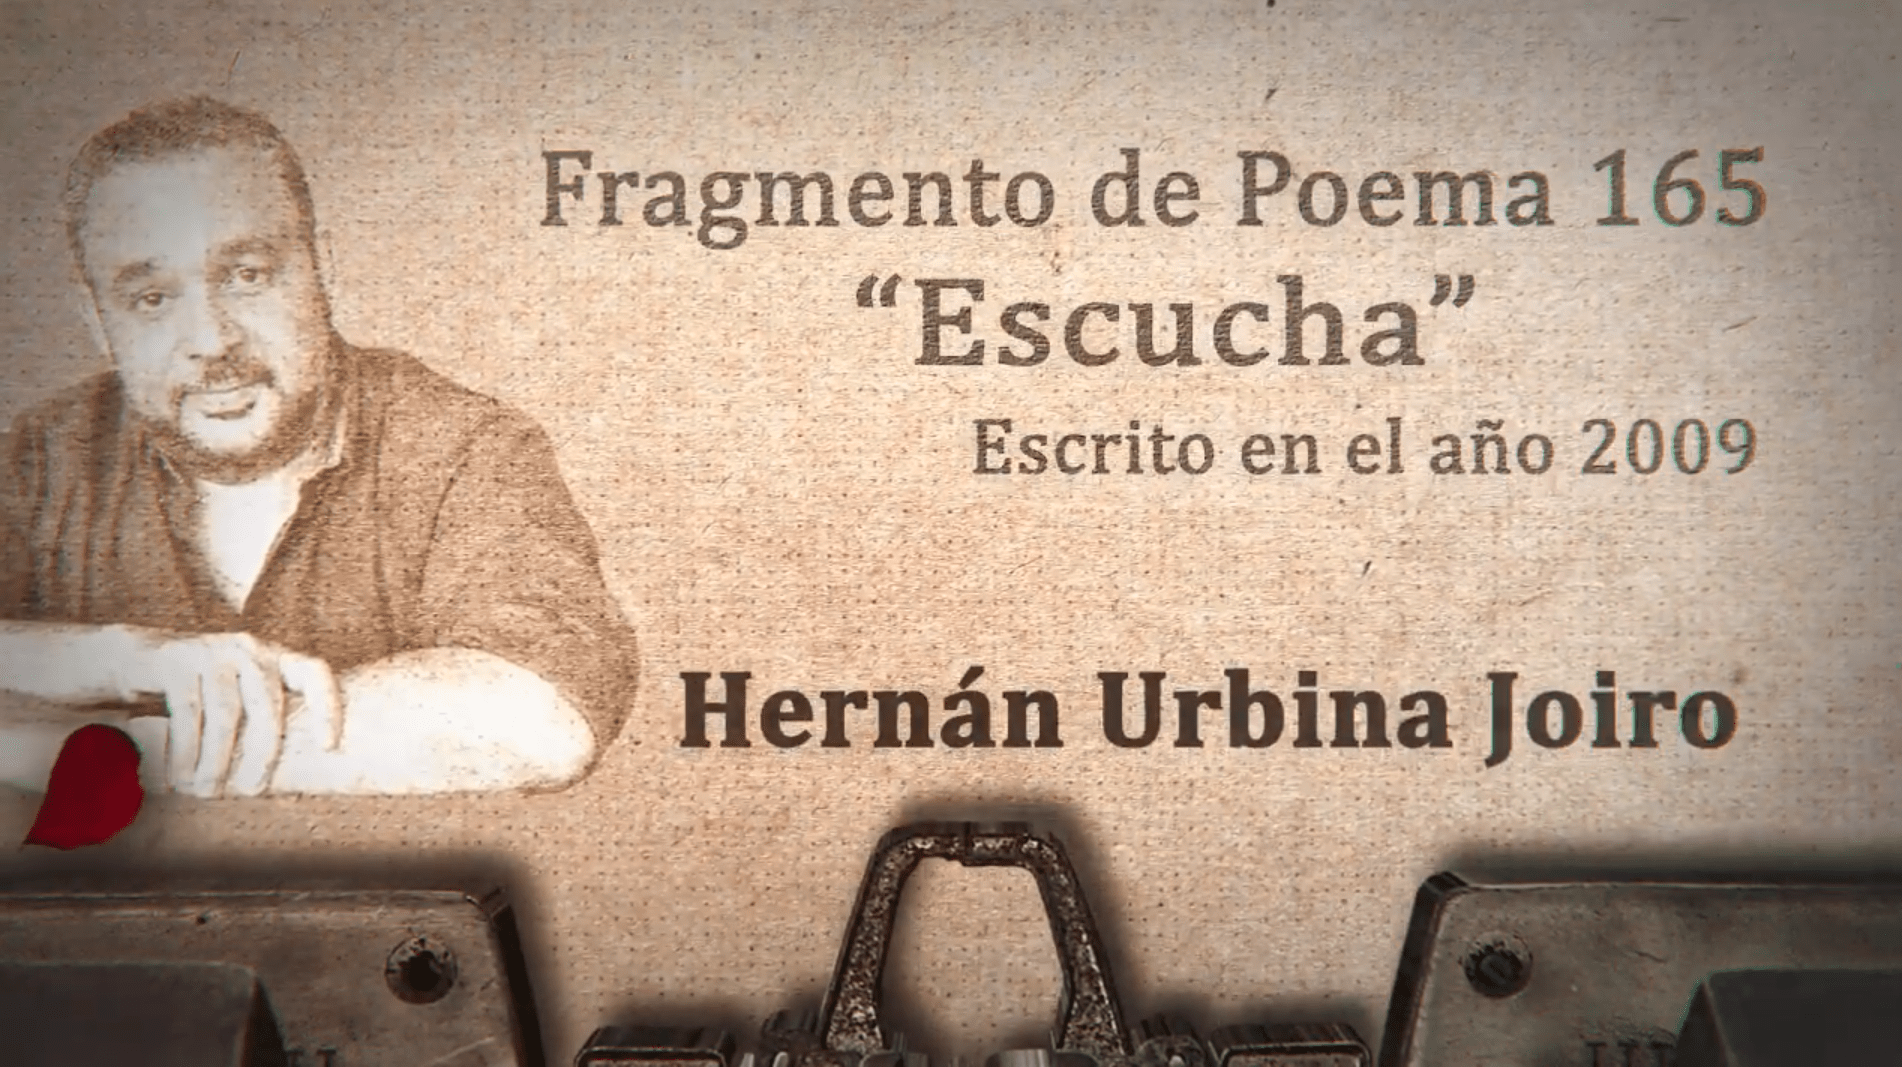 Hernán Urbina Joiro poeta